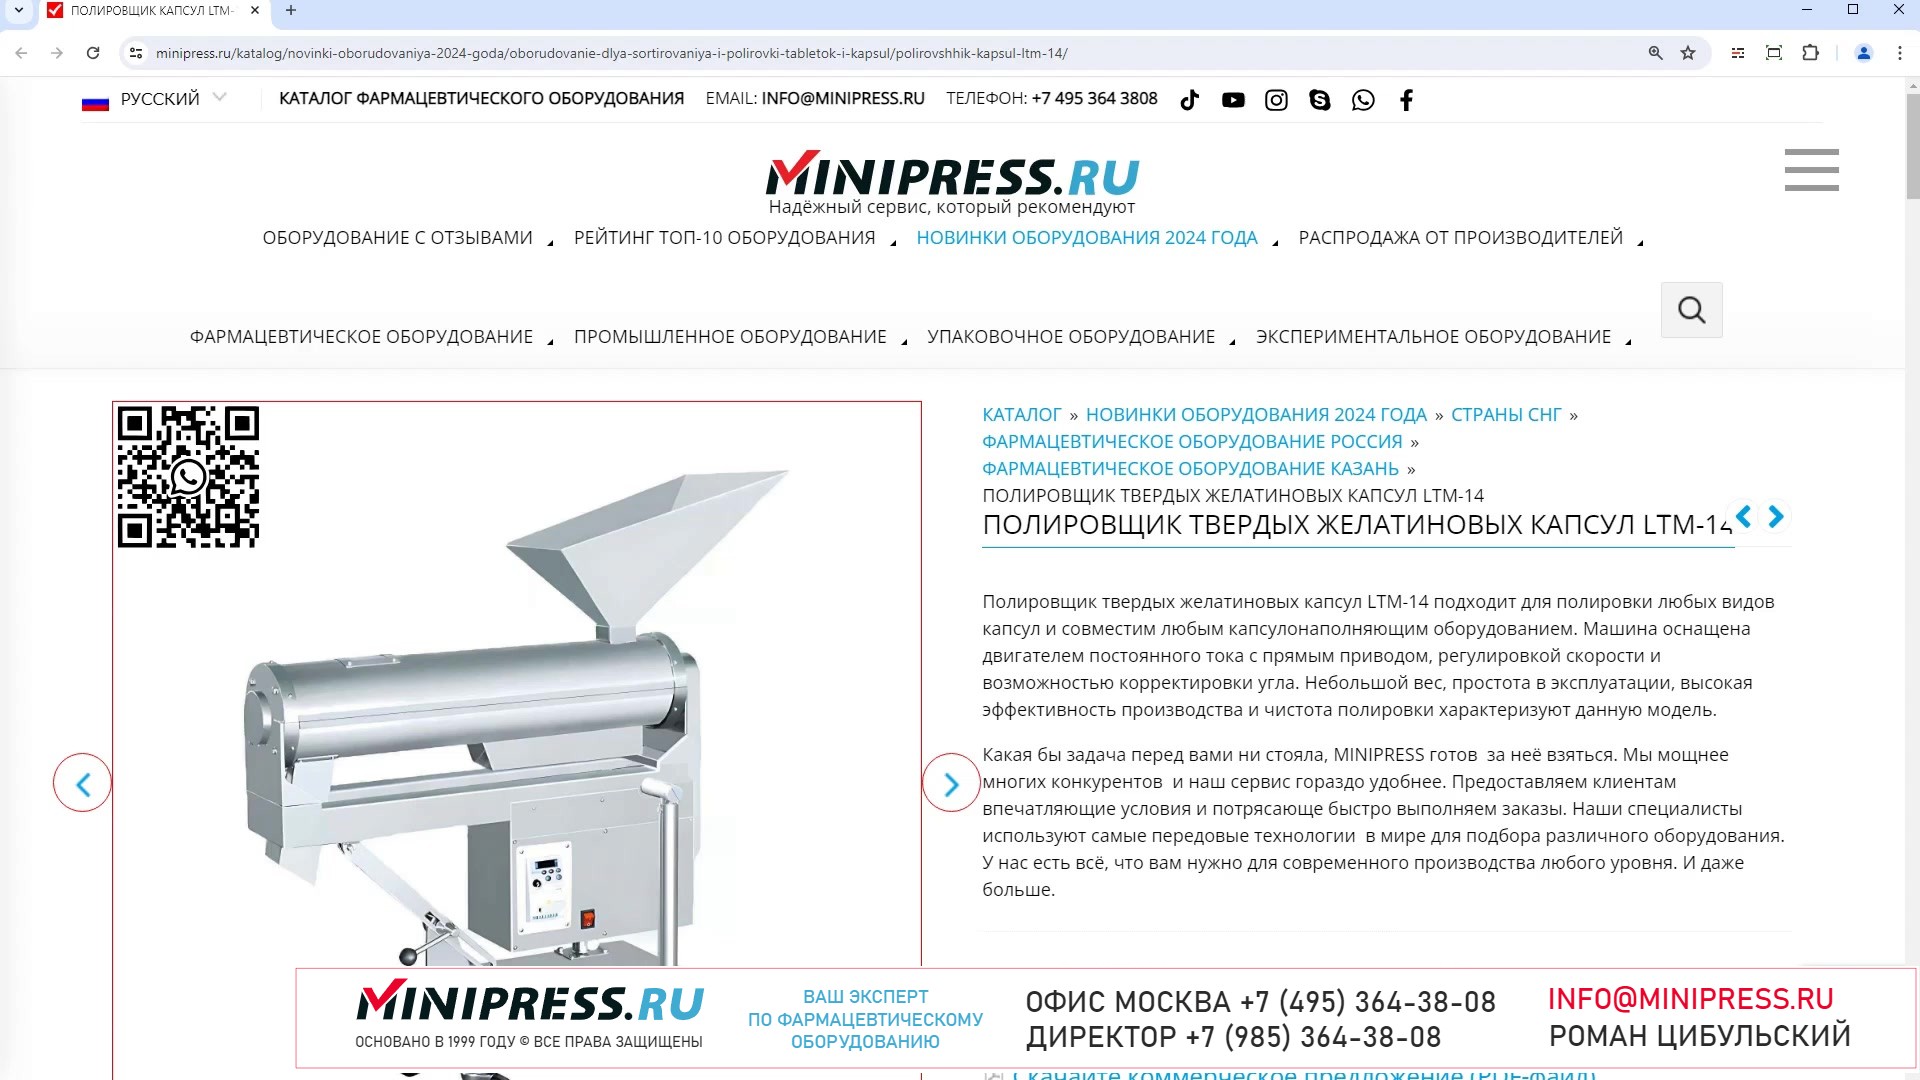 Minipress.ru Полировщик твердых желатиновых капсул LTM-14